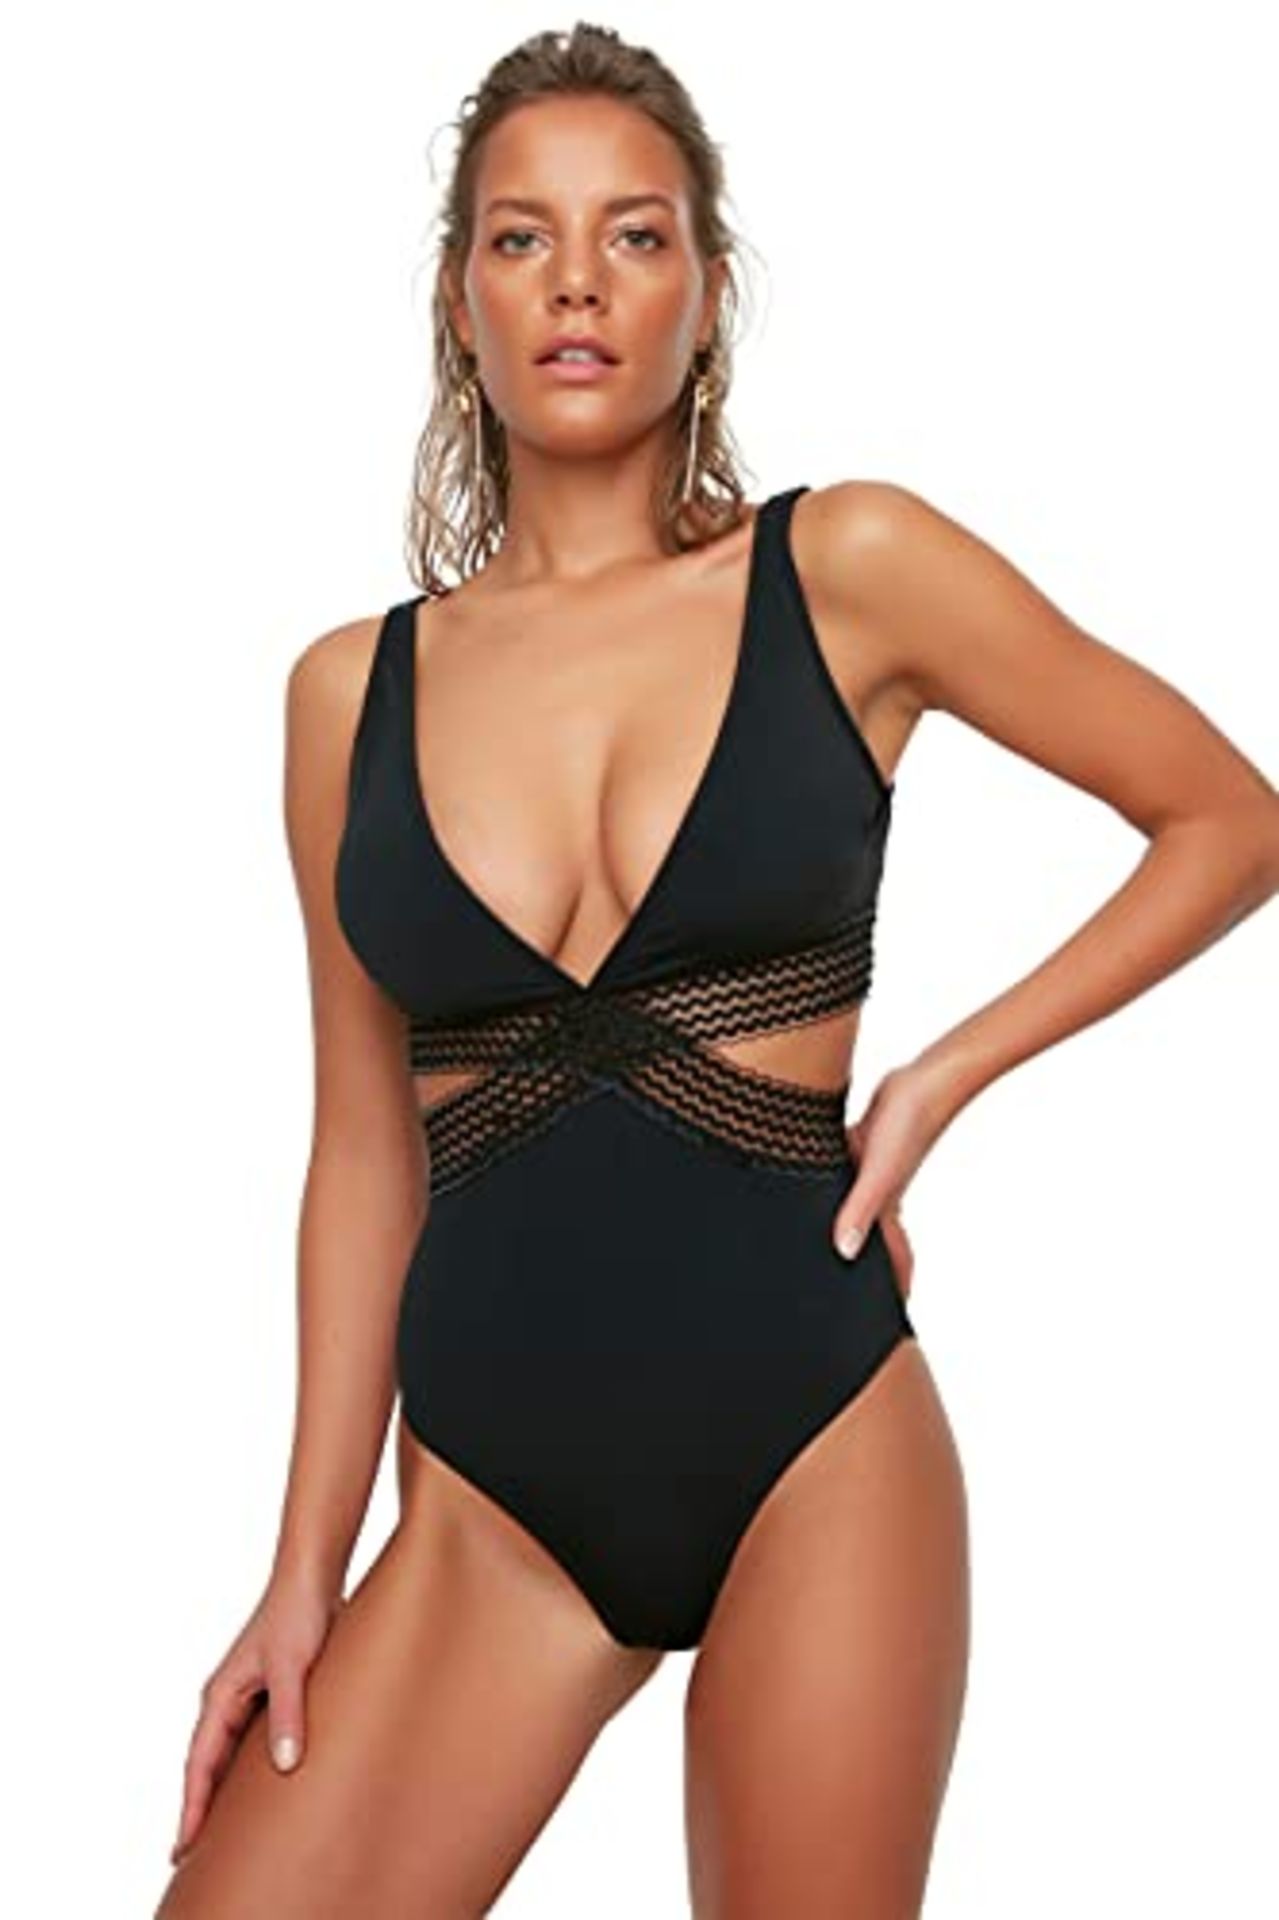 Trendyol Women's Black Striped Detailed One-Piece Swimsuit, Size 48